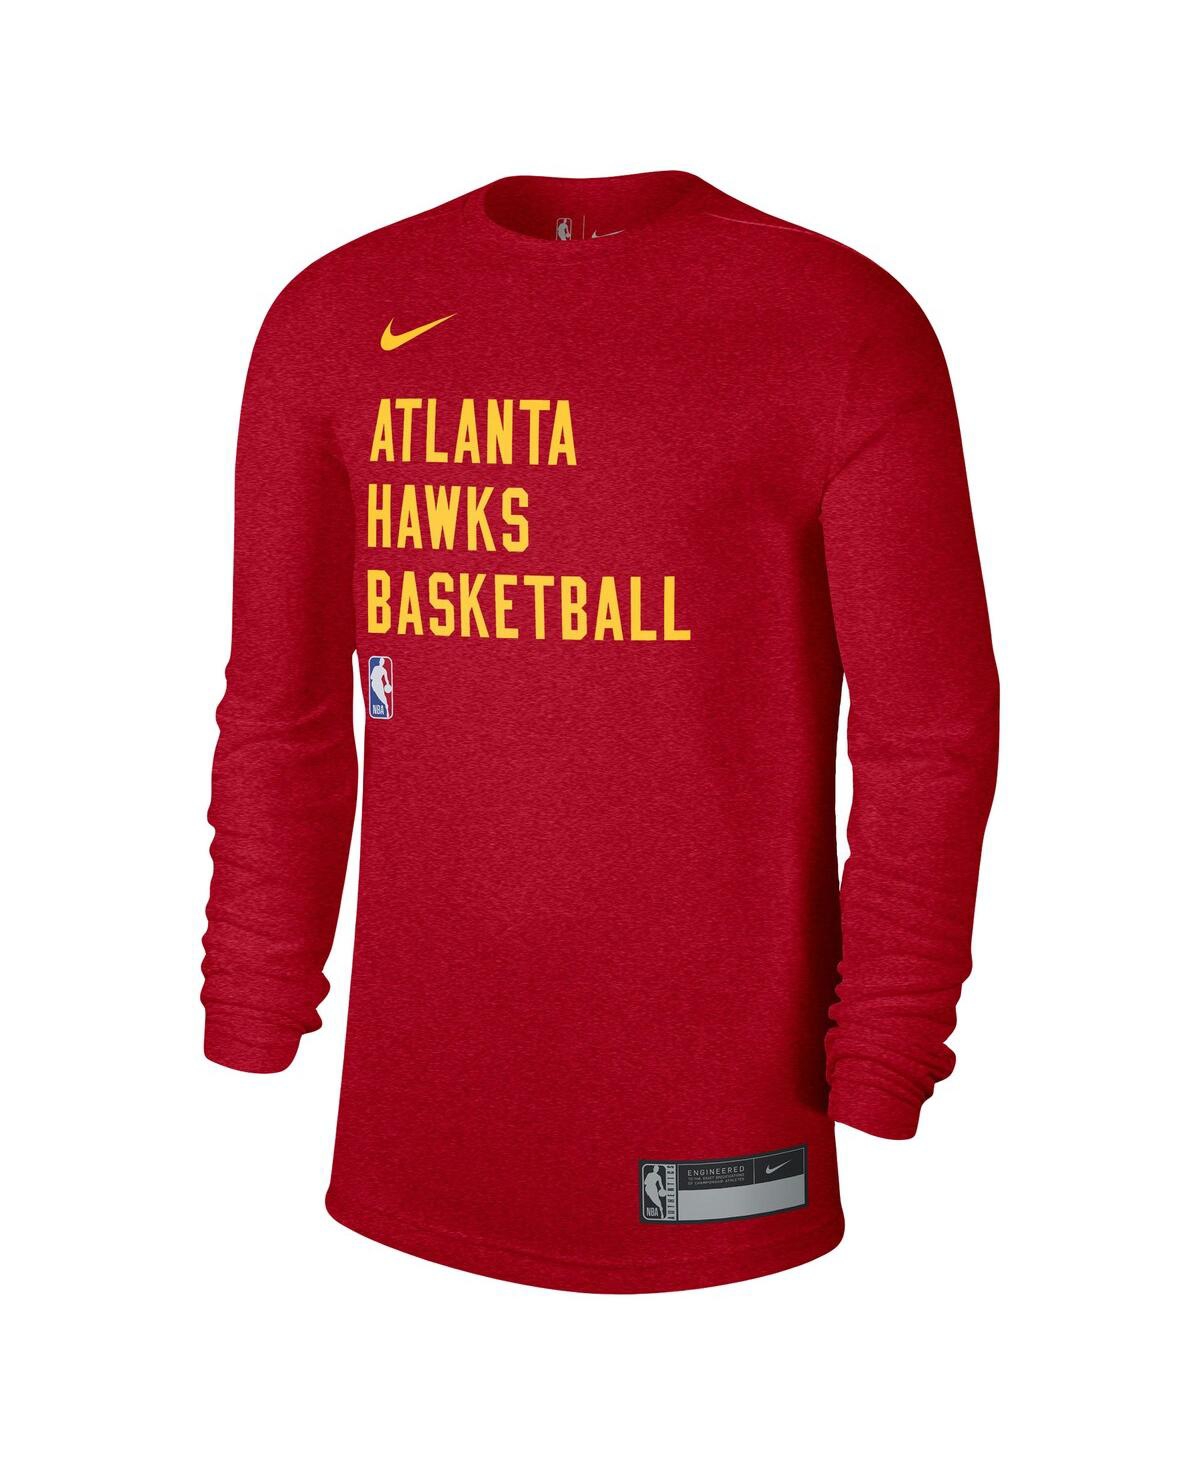 Nike Atlanta Hawks Team Issue Performance Coach Polo Shirt Grey AV1766-002  NEW